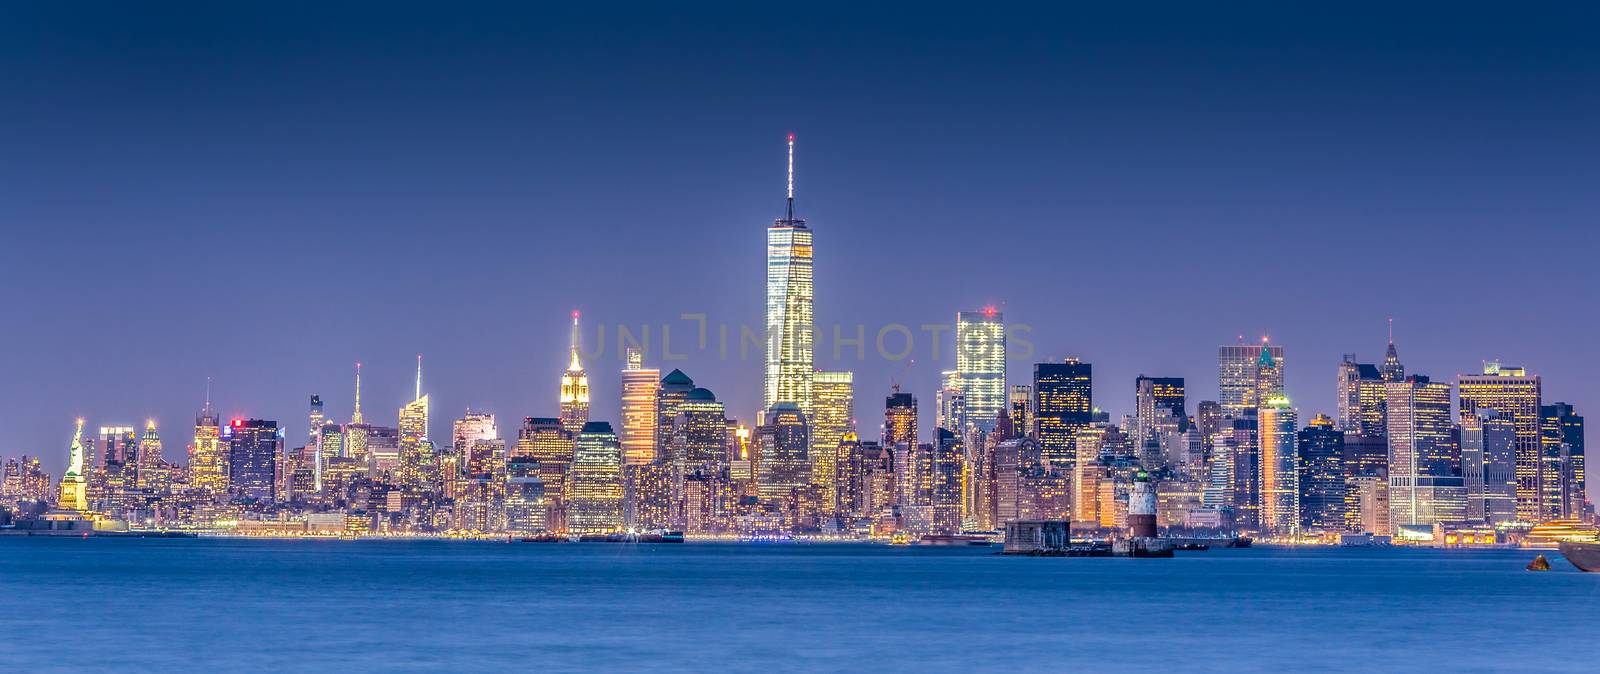 New York City Manhattan downtown skyline by kasto